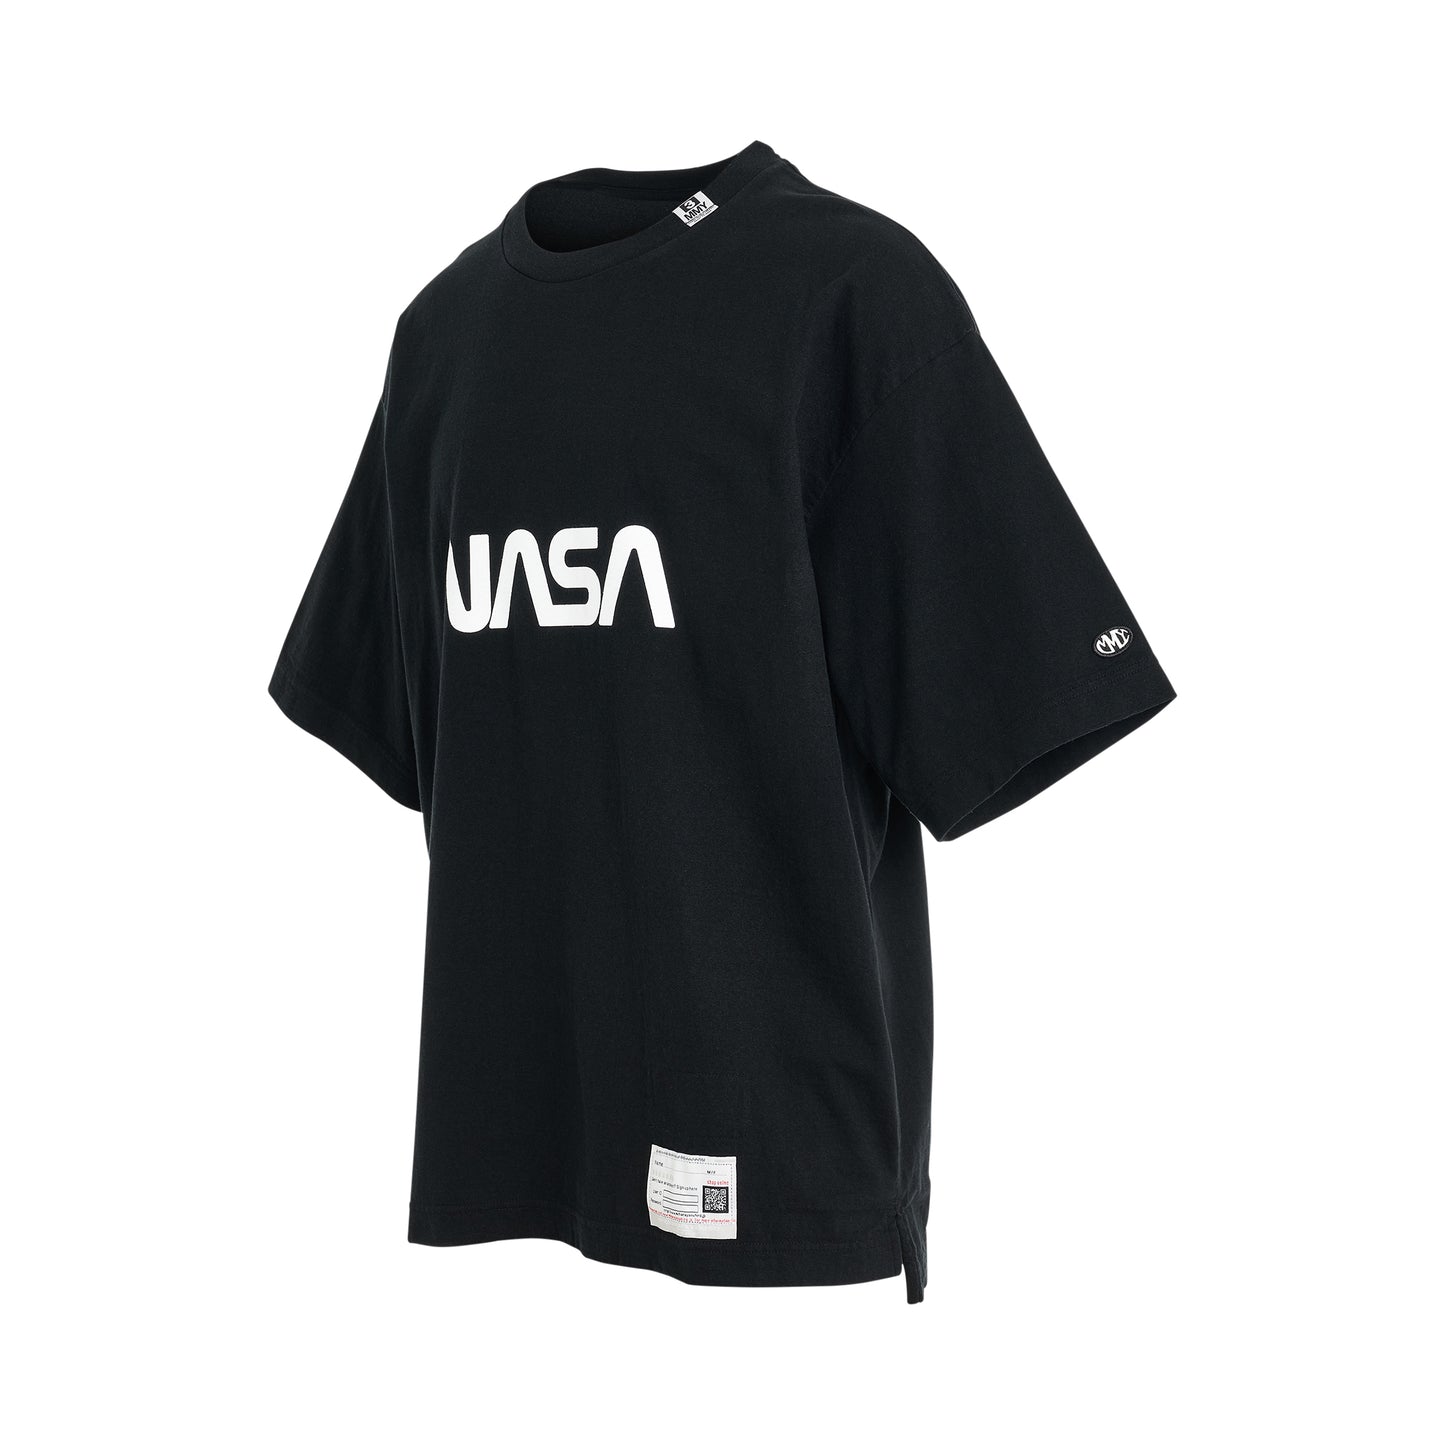 Nasa Printed T-Shirt in Black